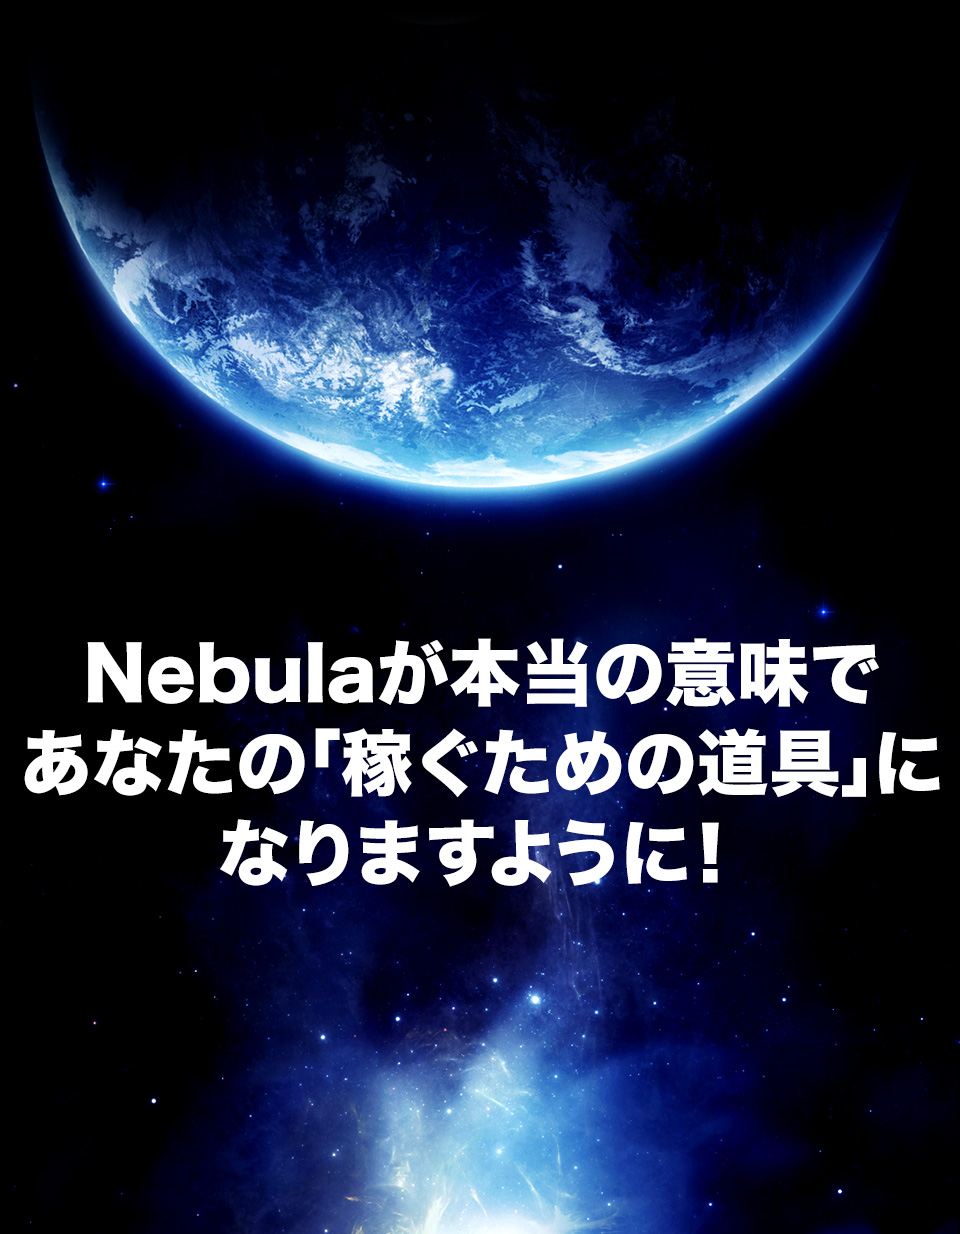 Nebulaが本当の意味であなたの「稼ぐための道具」になりますように！